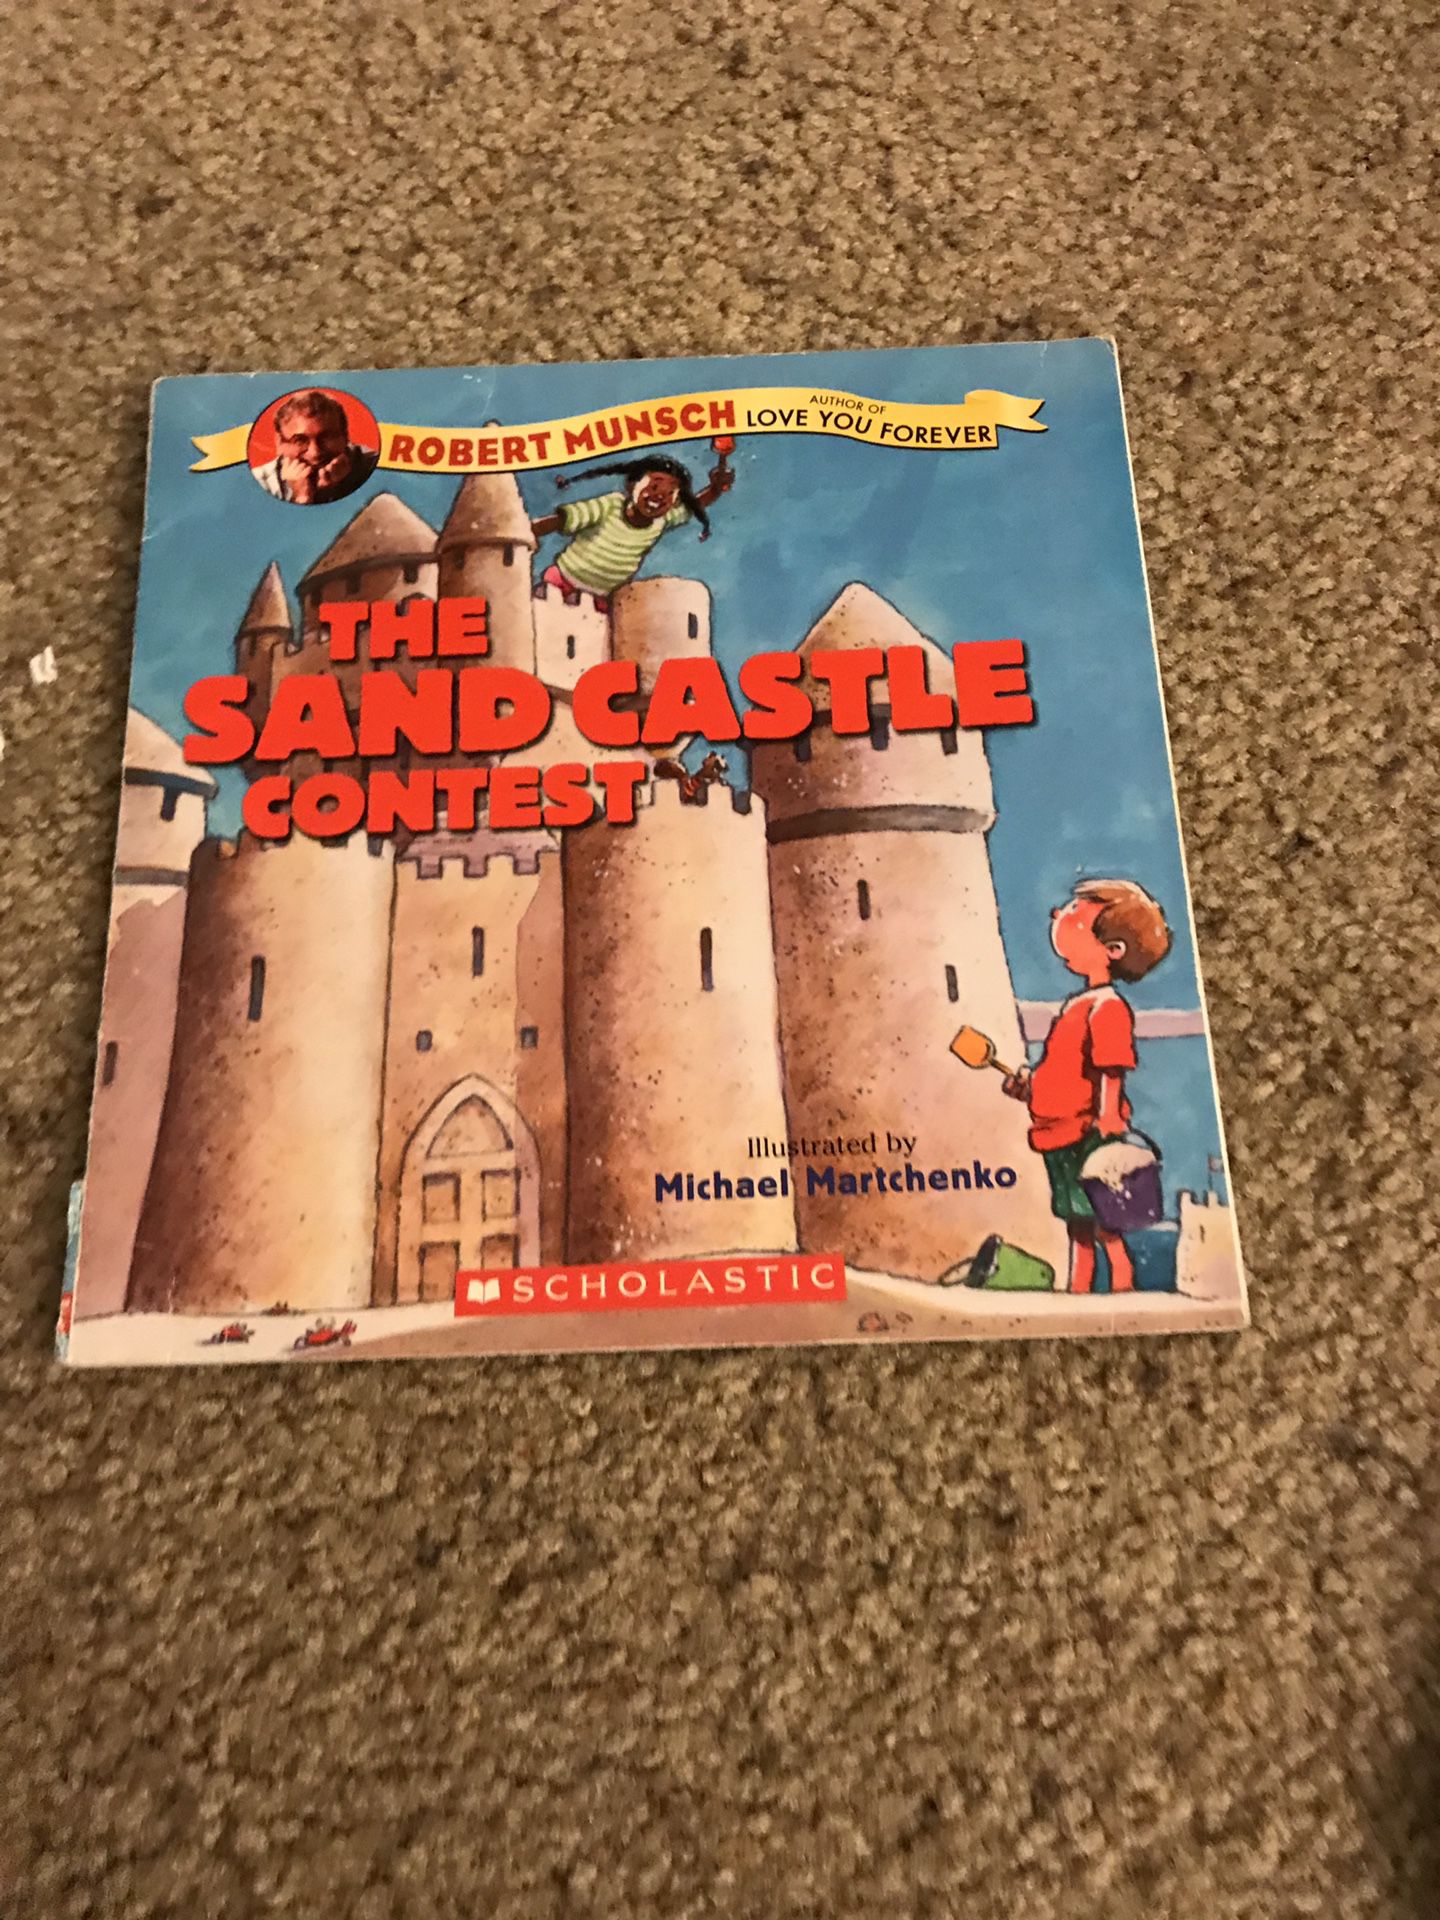 The sand castle